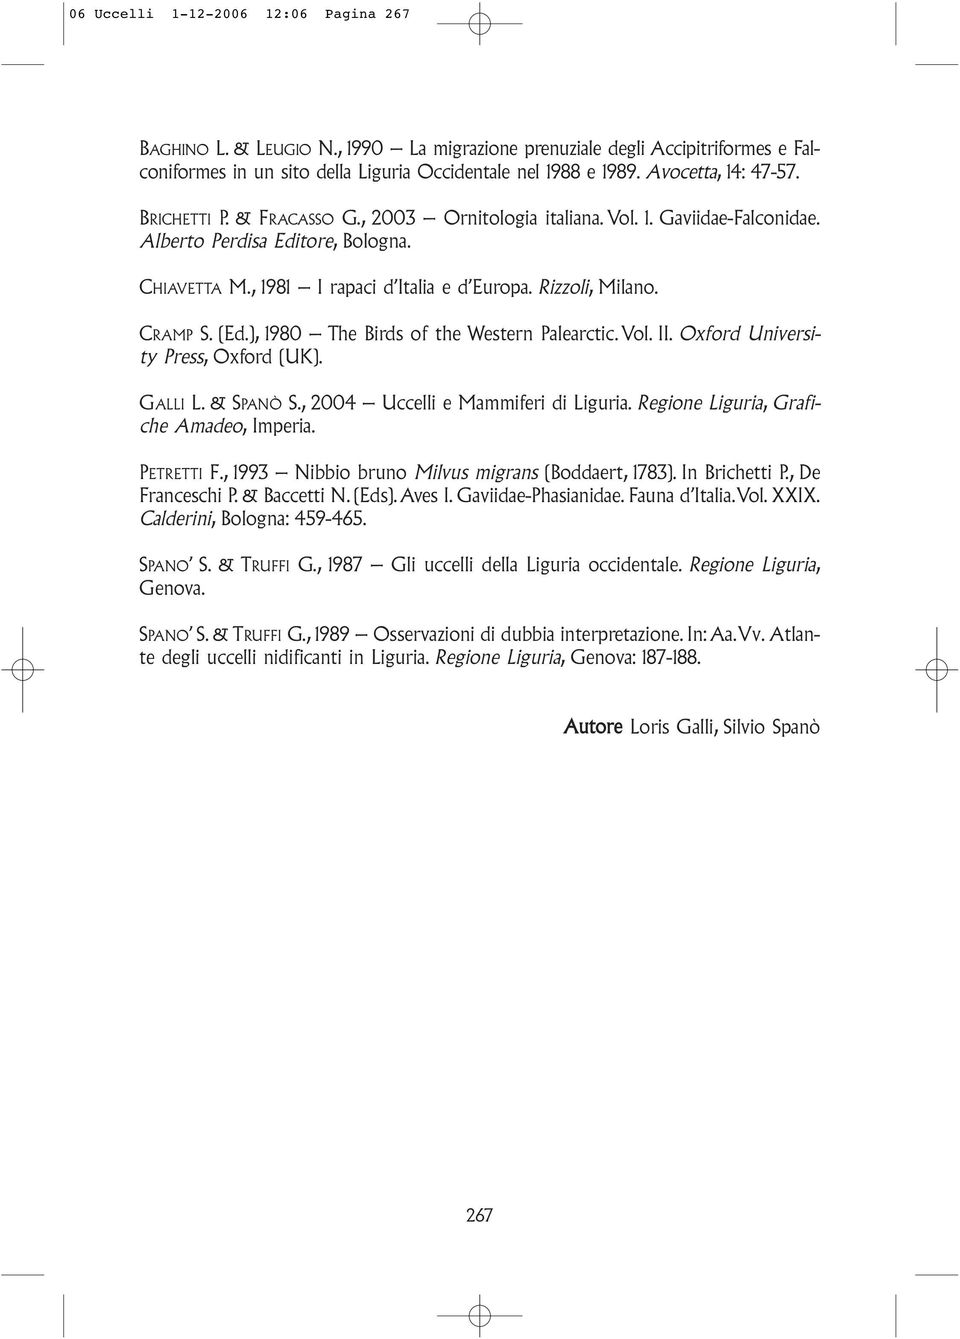 Rizzoli, Milano. CRAMP S. (Ed.), 1980 The Birds of the Western Palearctic. Vol. II. Oxford University Press, Oxford (UK). GALLI L. & SPANÒ S., 2004 Uccelli e Mammiferi di Liguria.